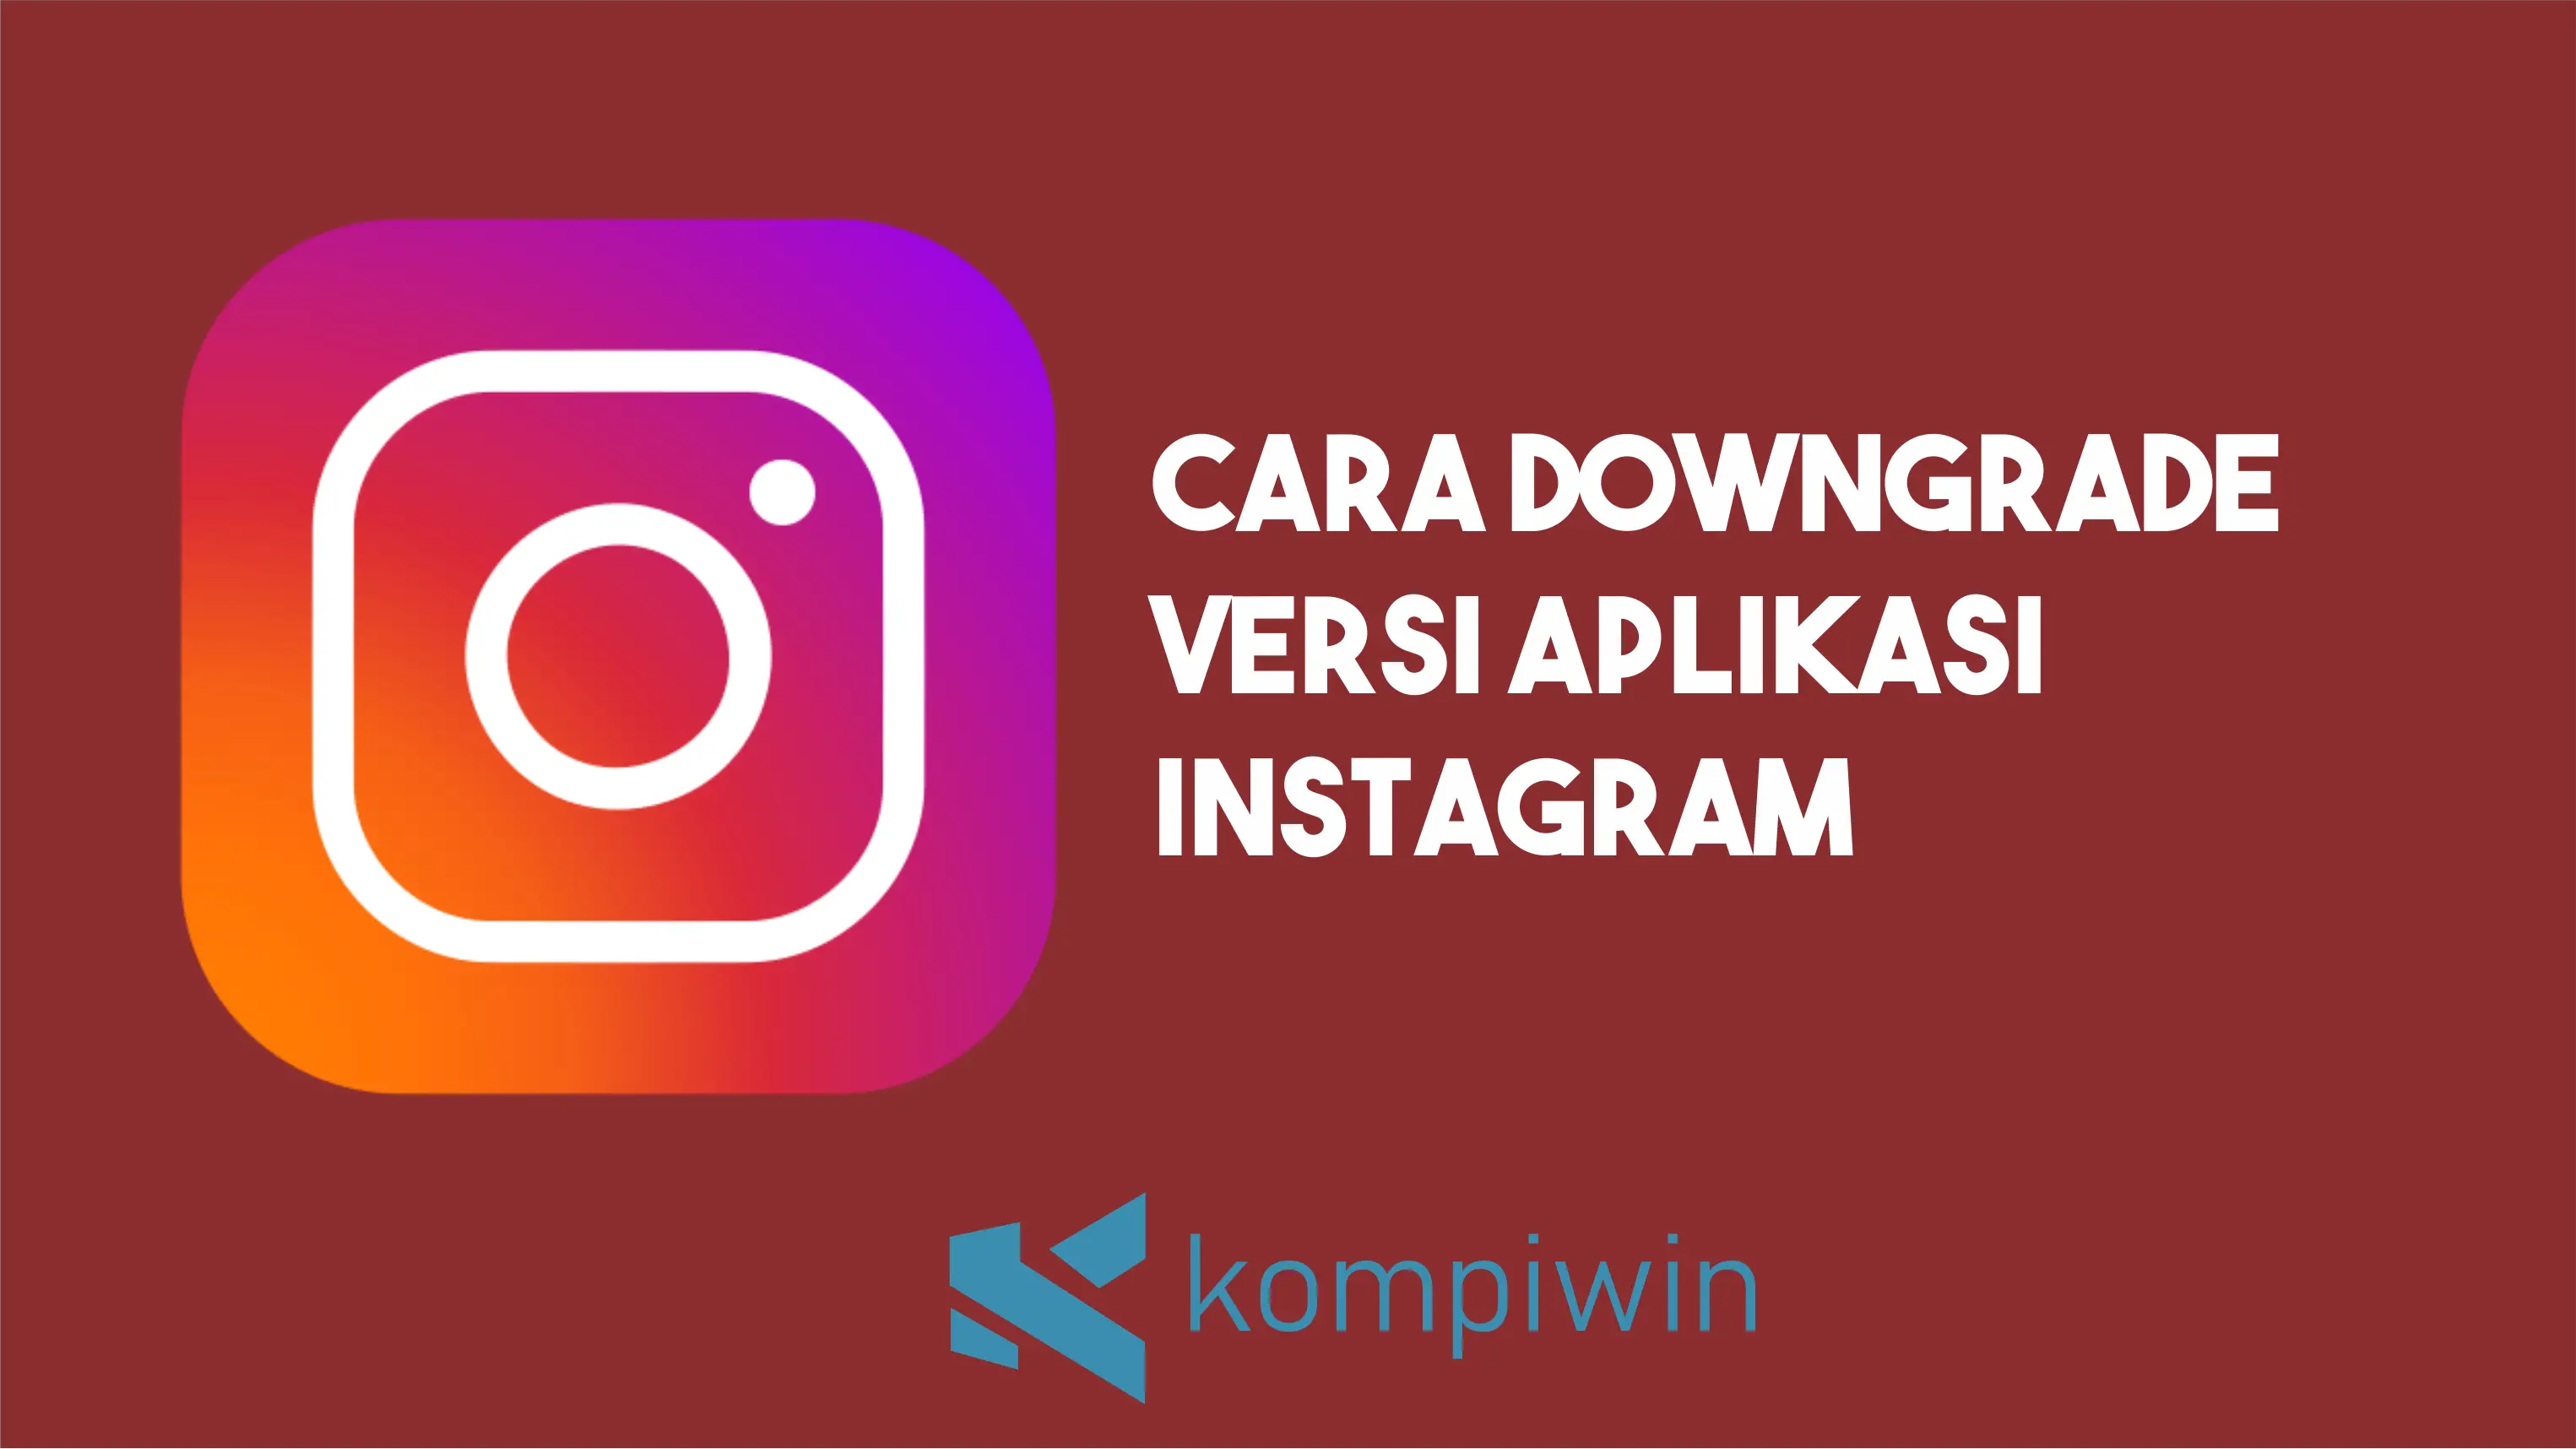 Cara Downgrade Versi Aplikasi Instagram